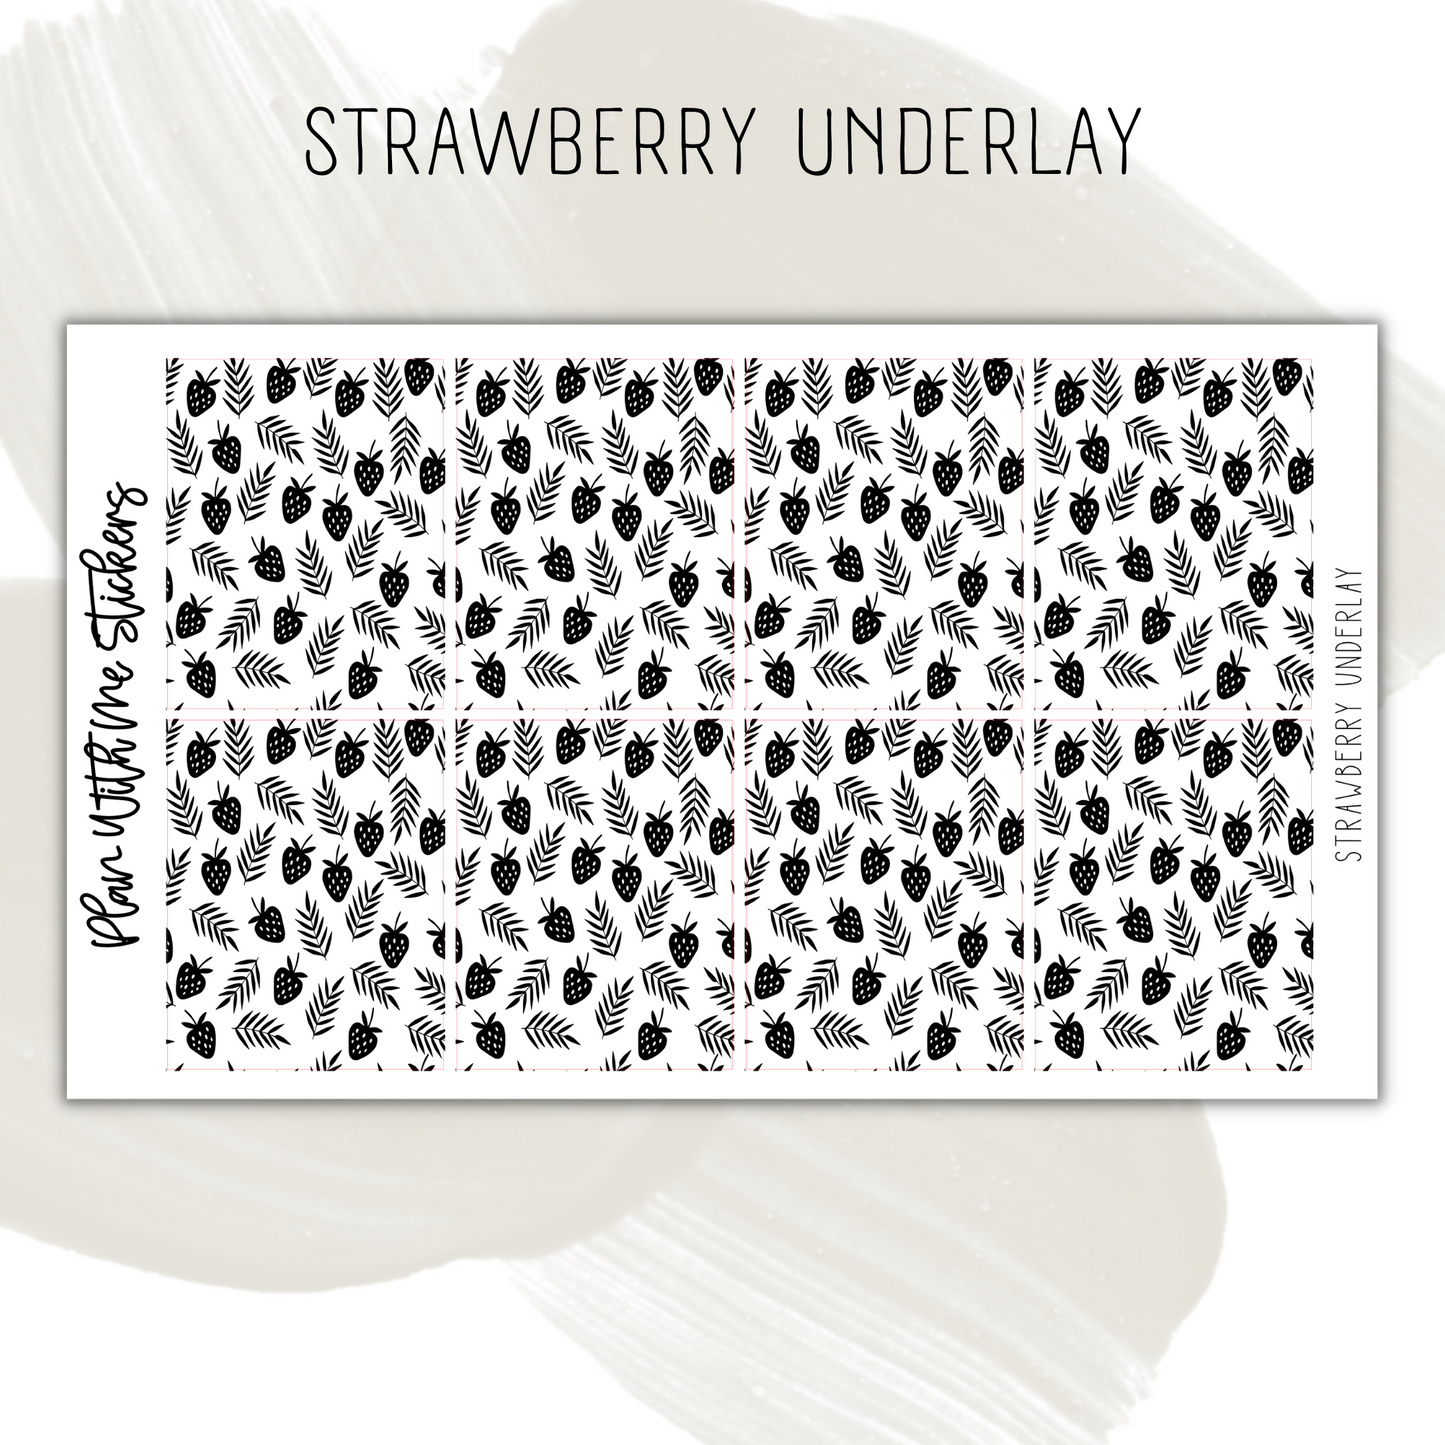 Strawberry Underlay